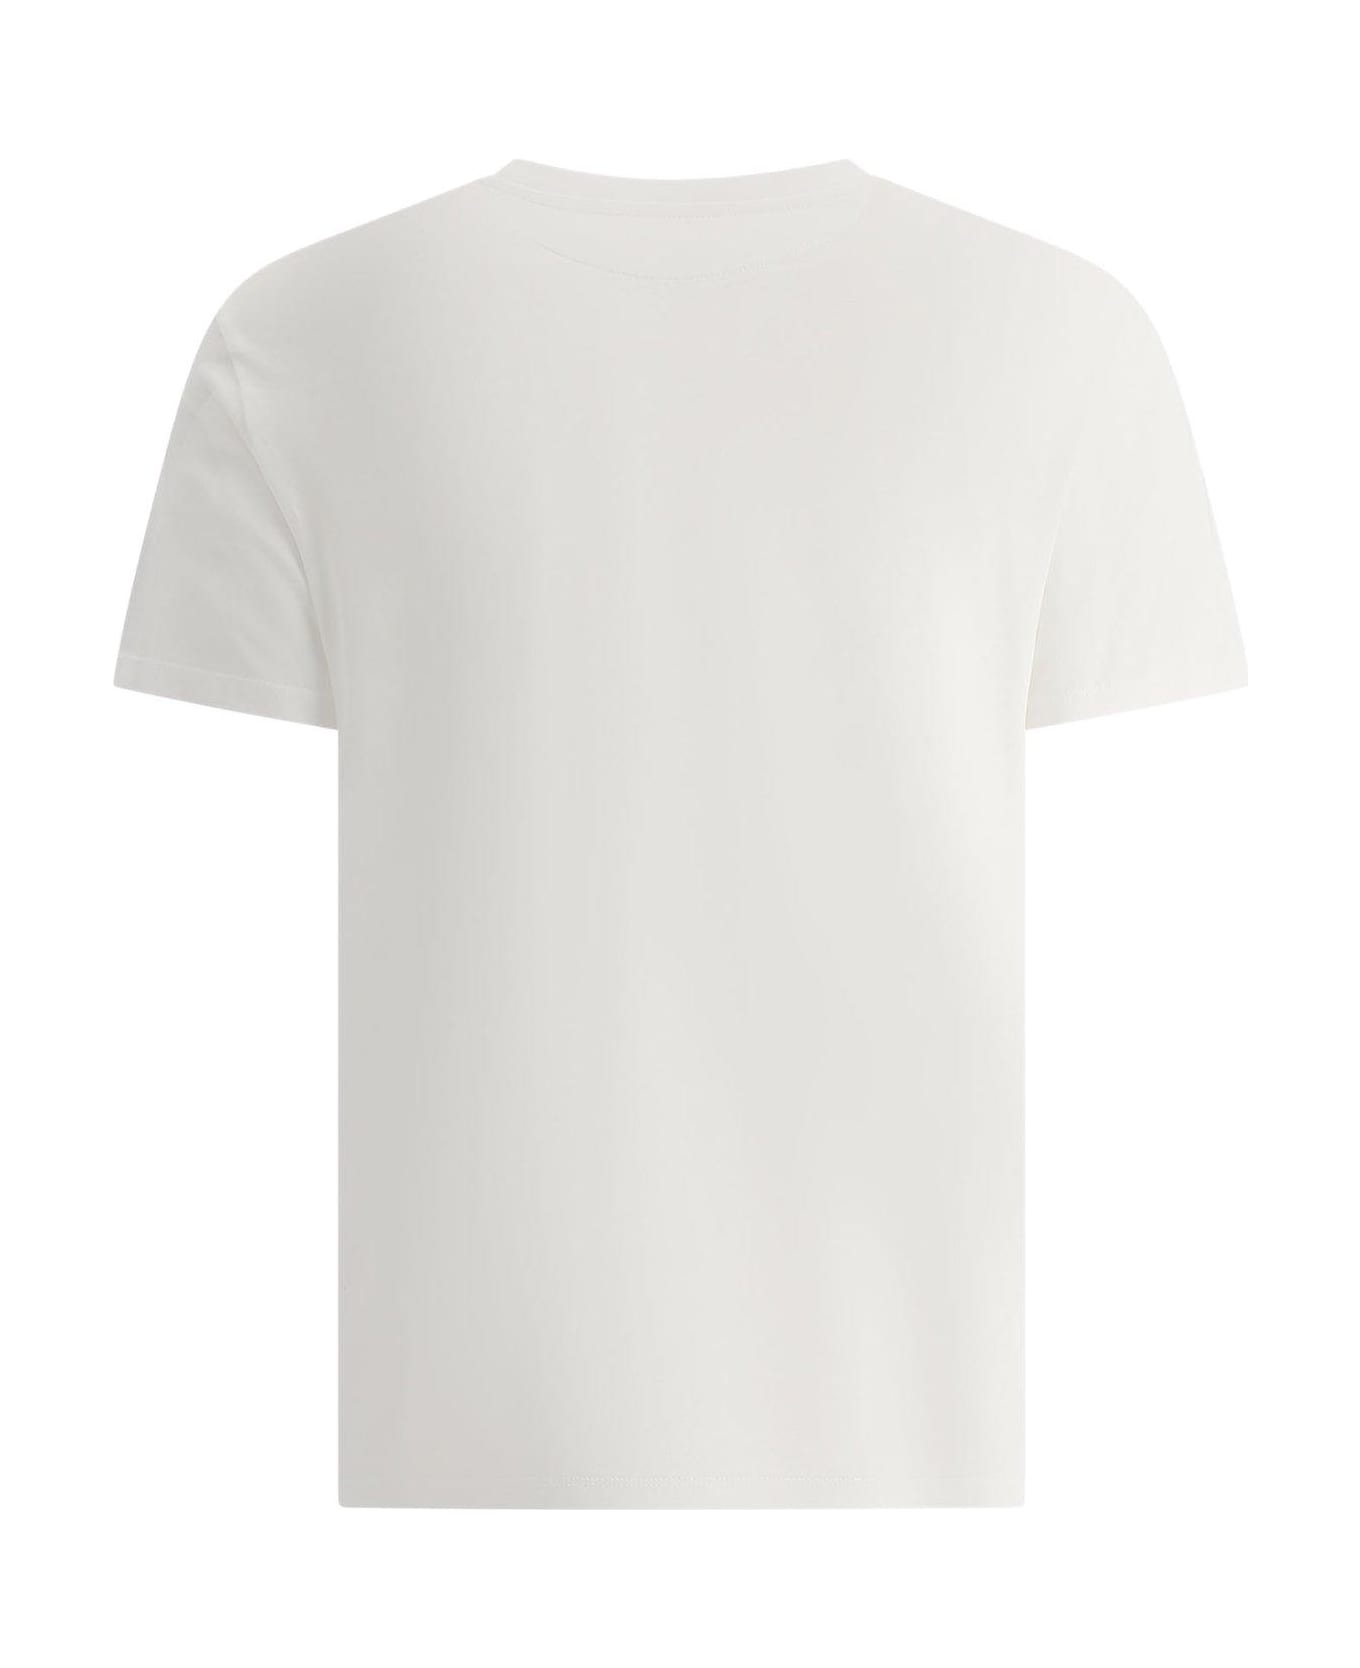 Valentino Logo Printed Crewneck T-shirt - Bianco